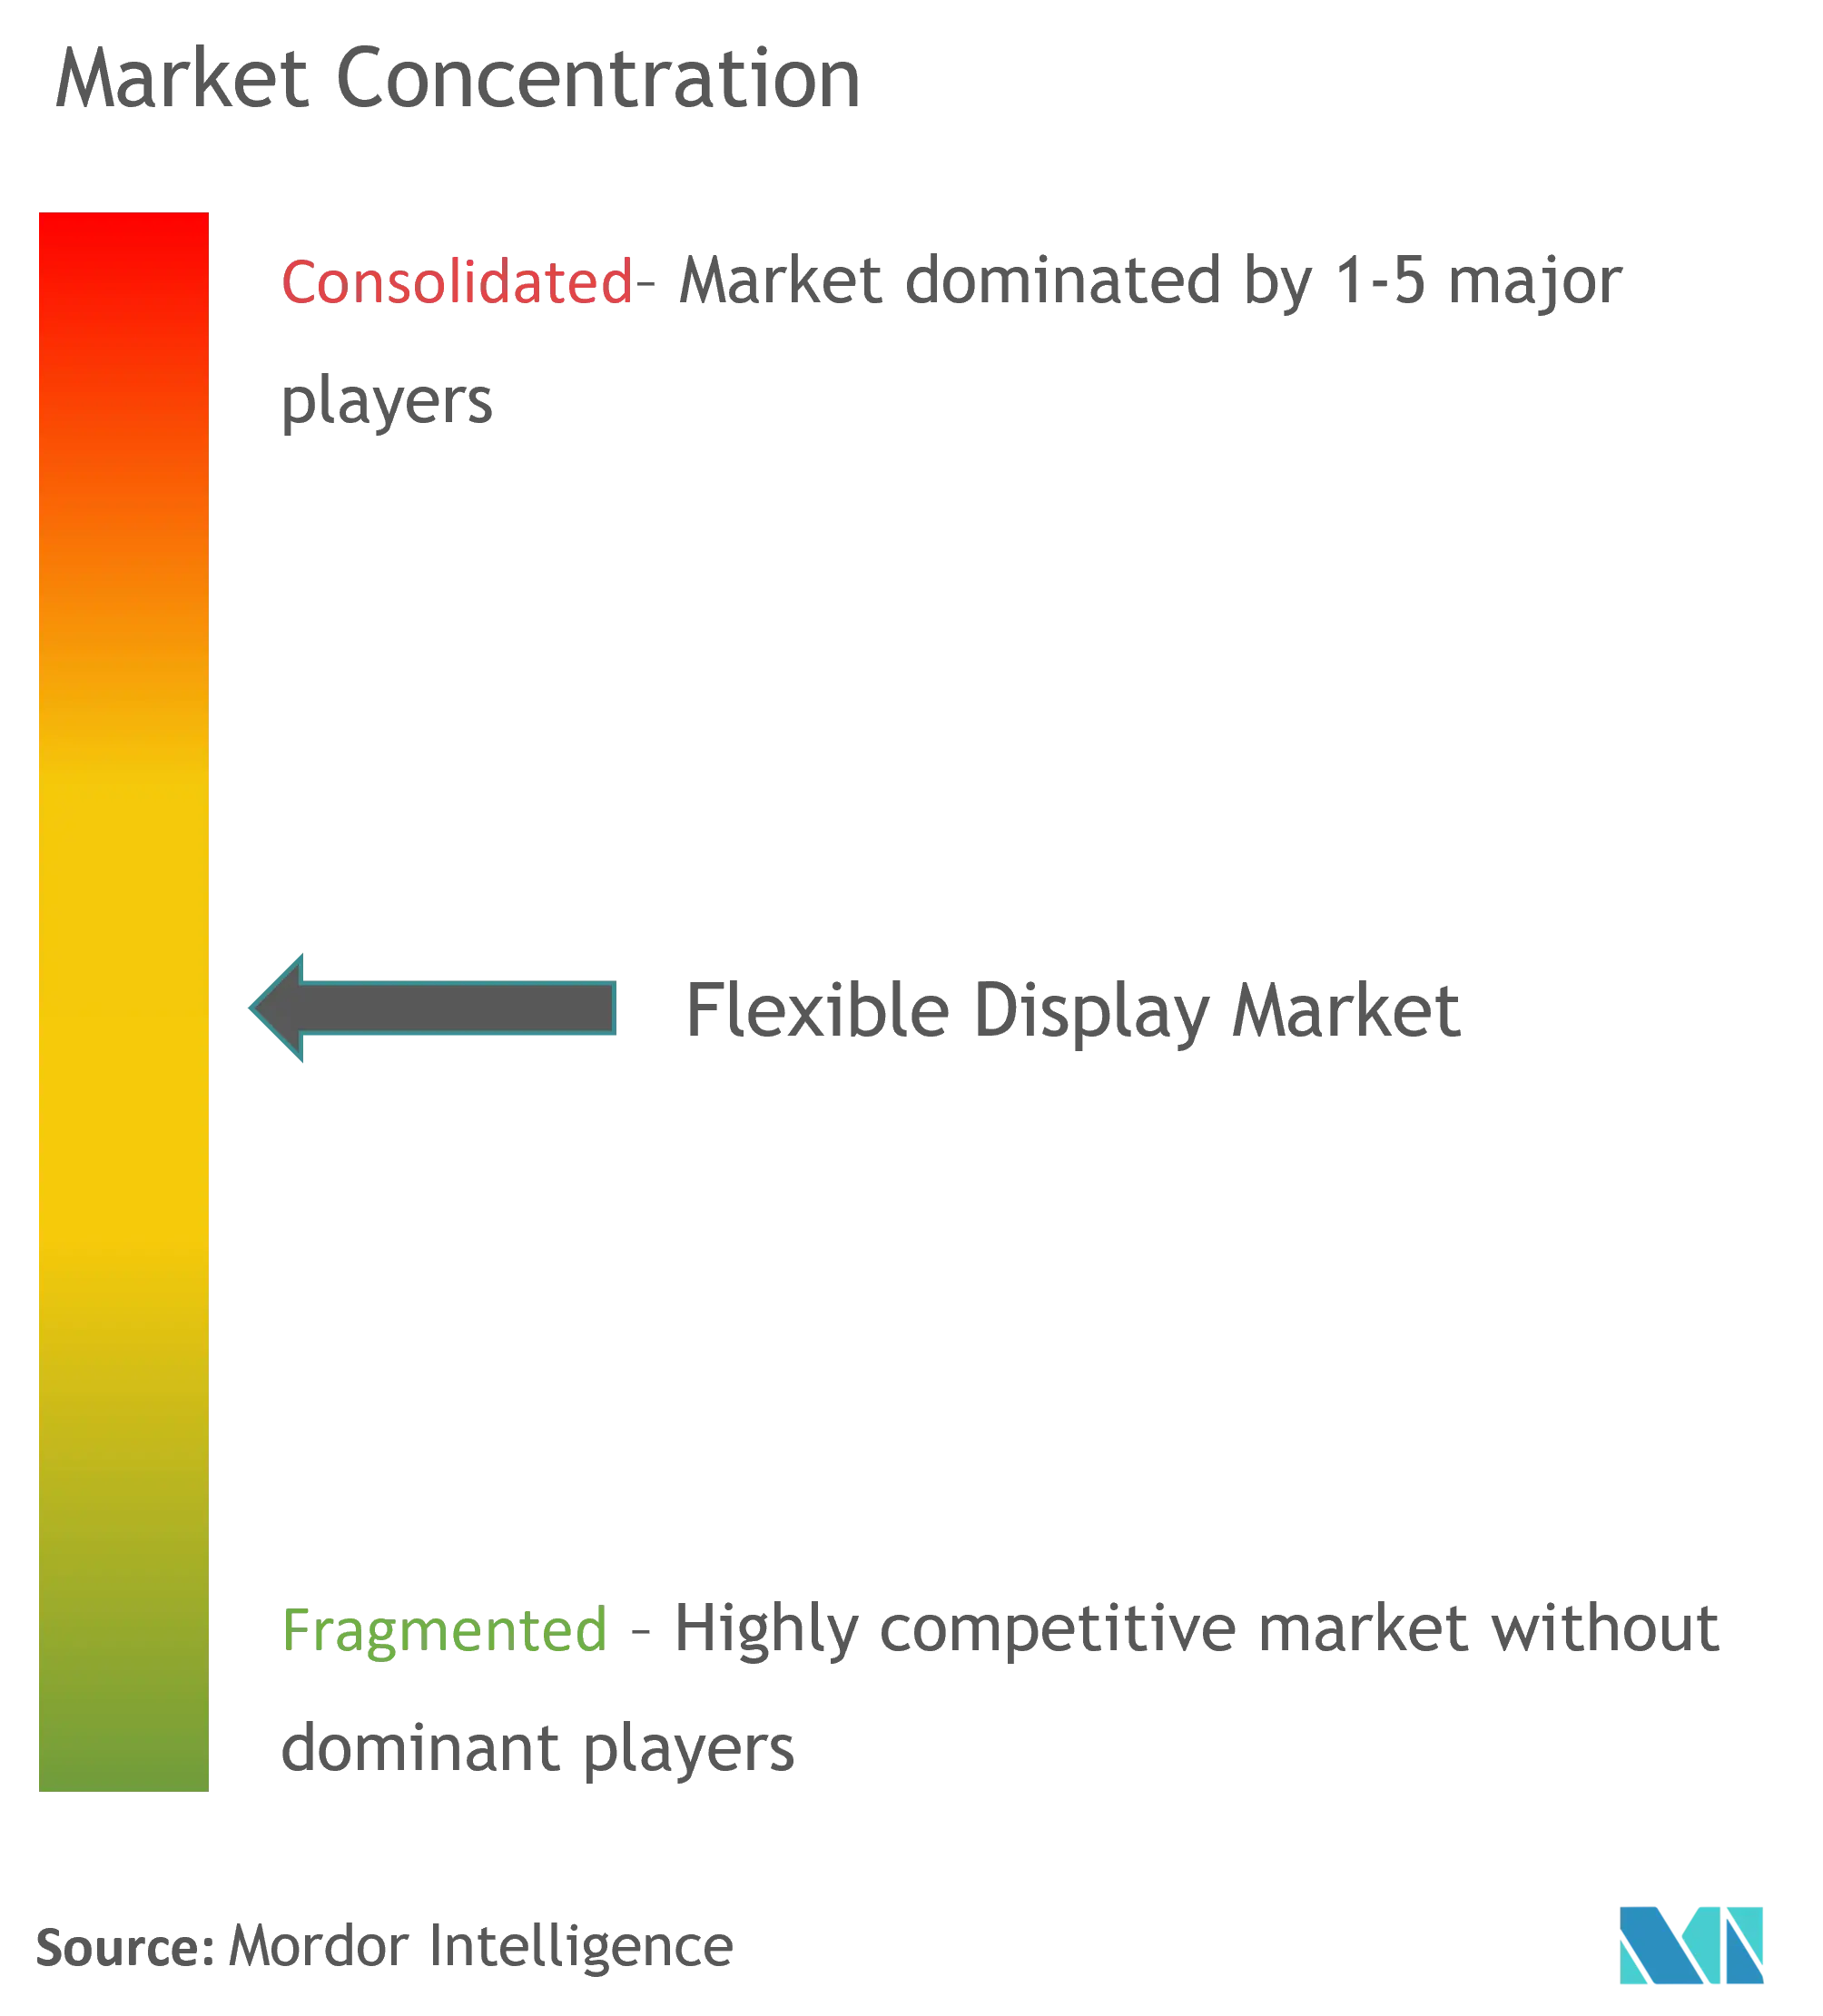 Flexible Display Market Concentration